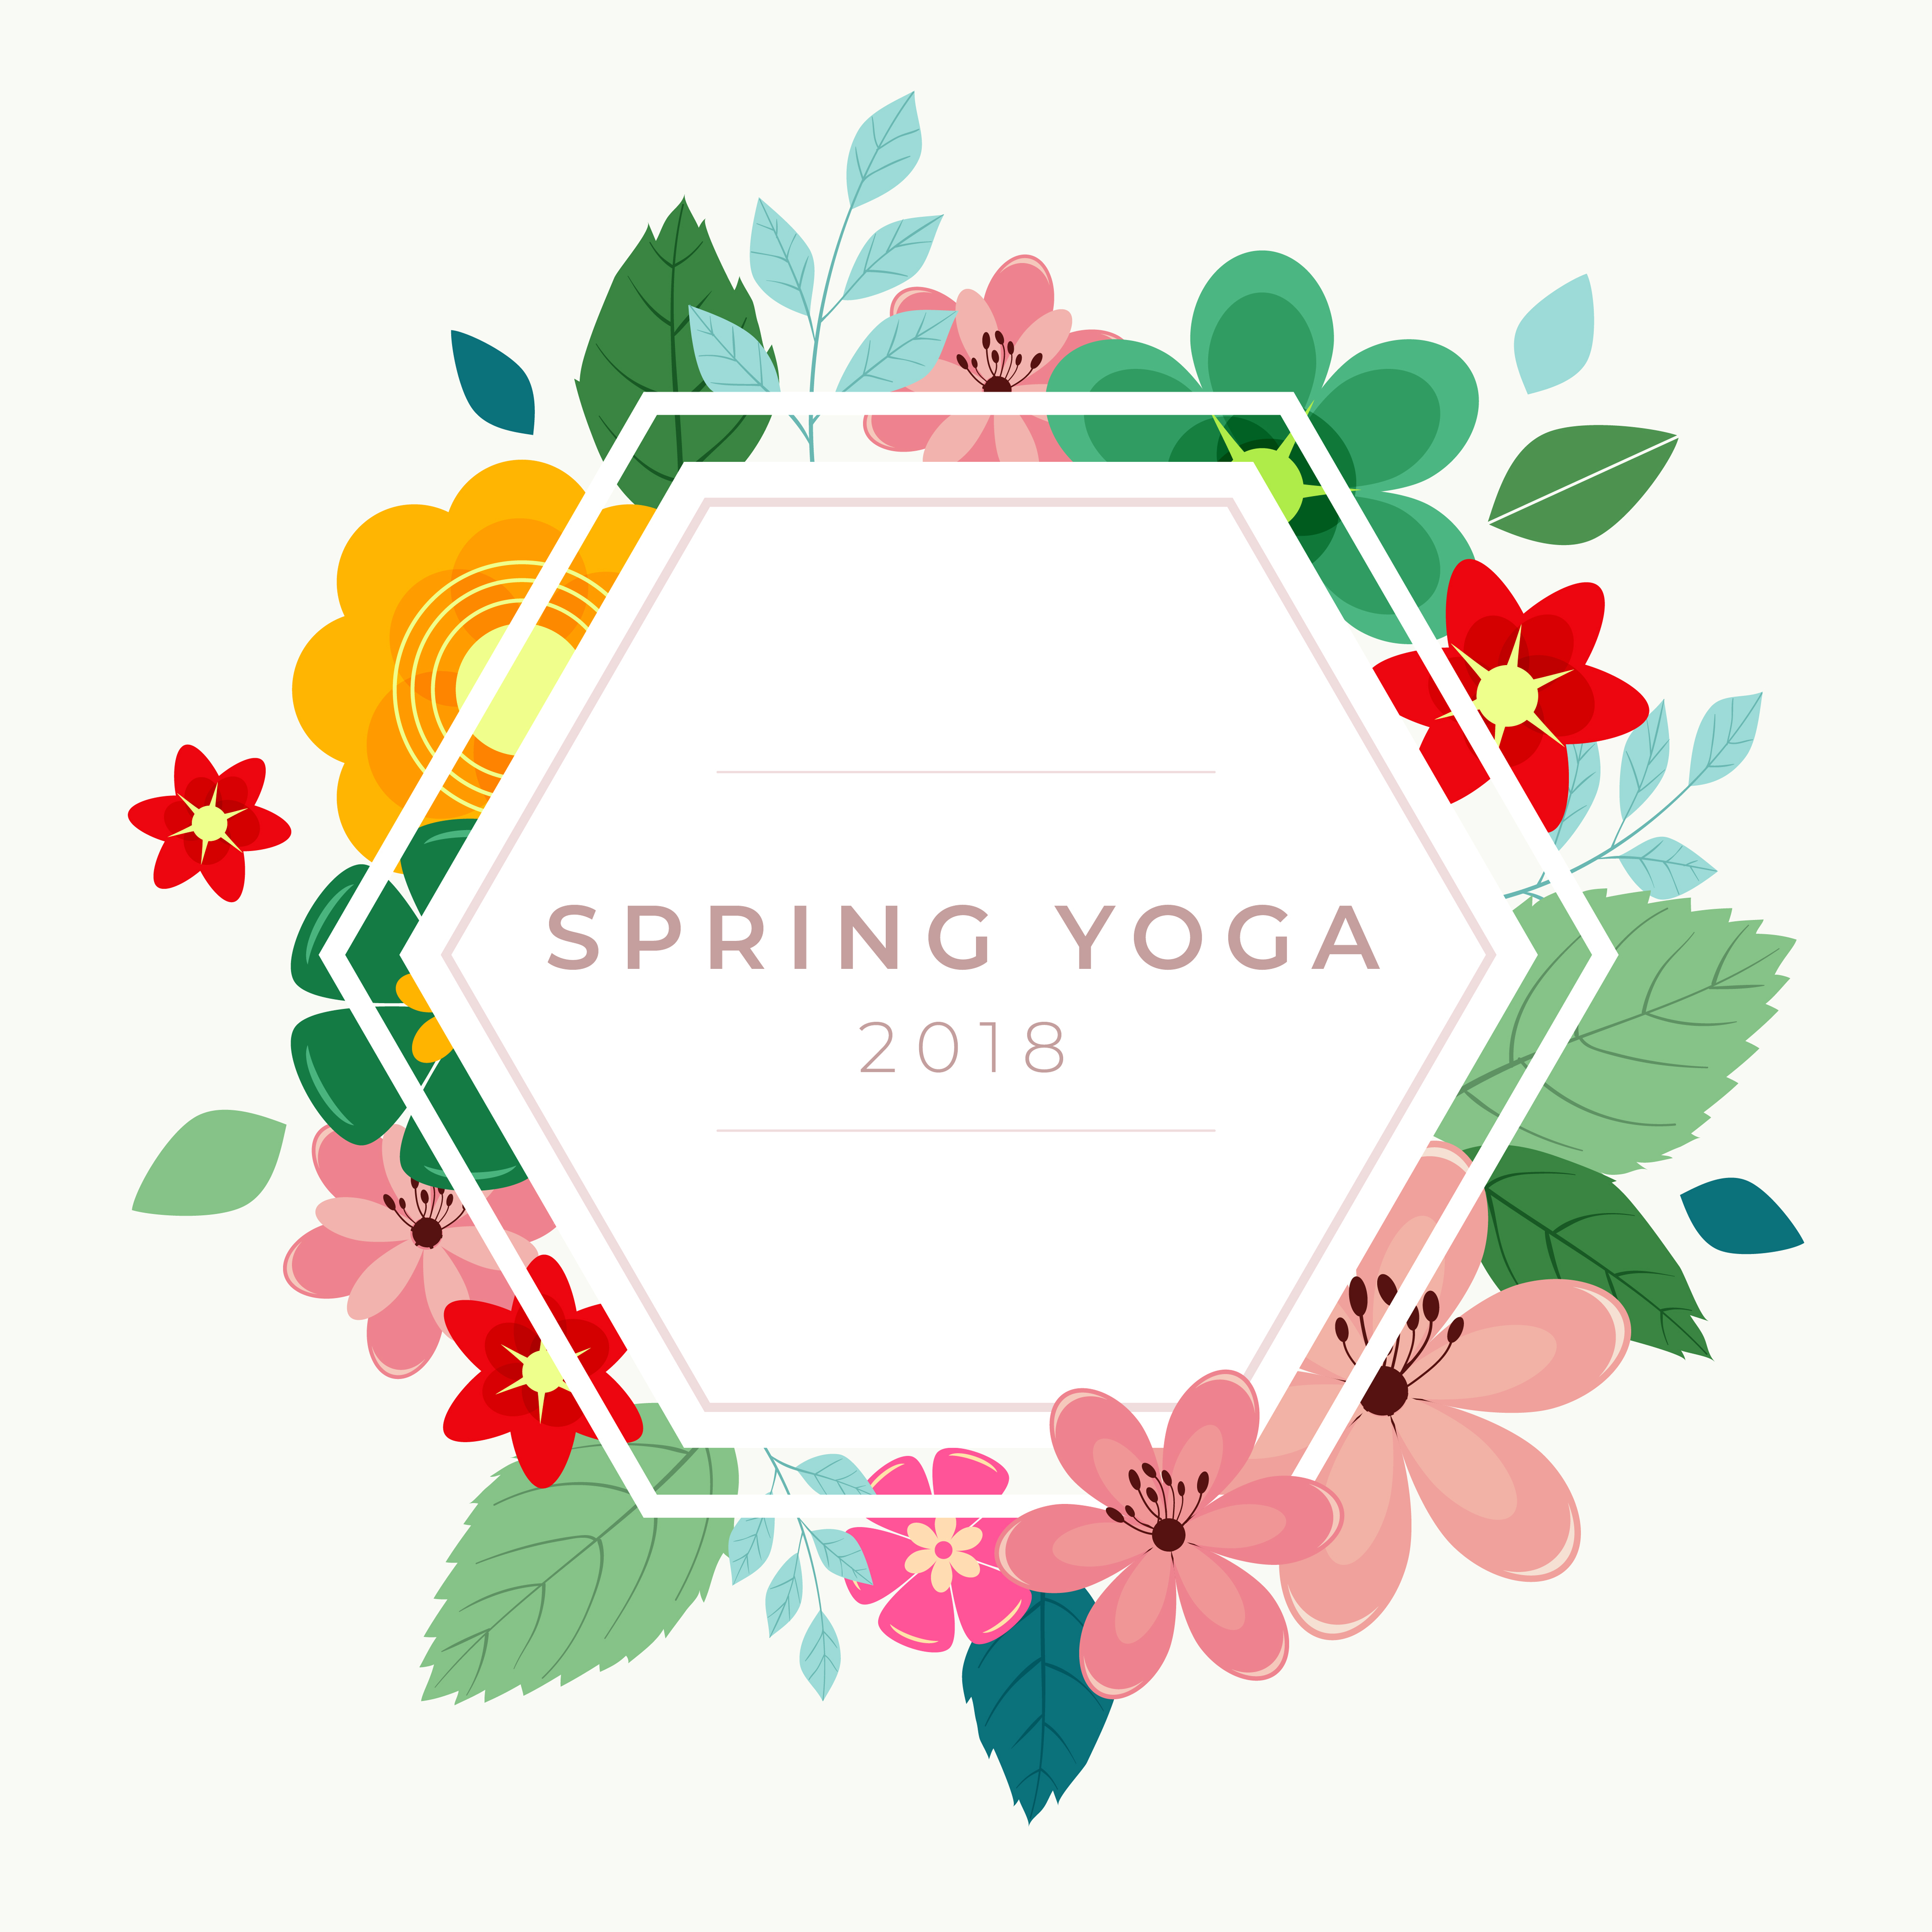 Spring Yoga 2018